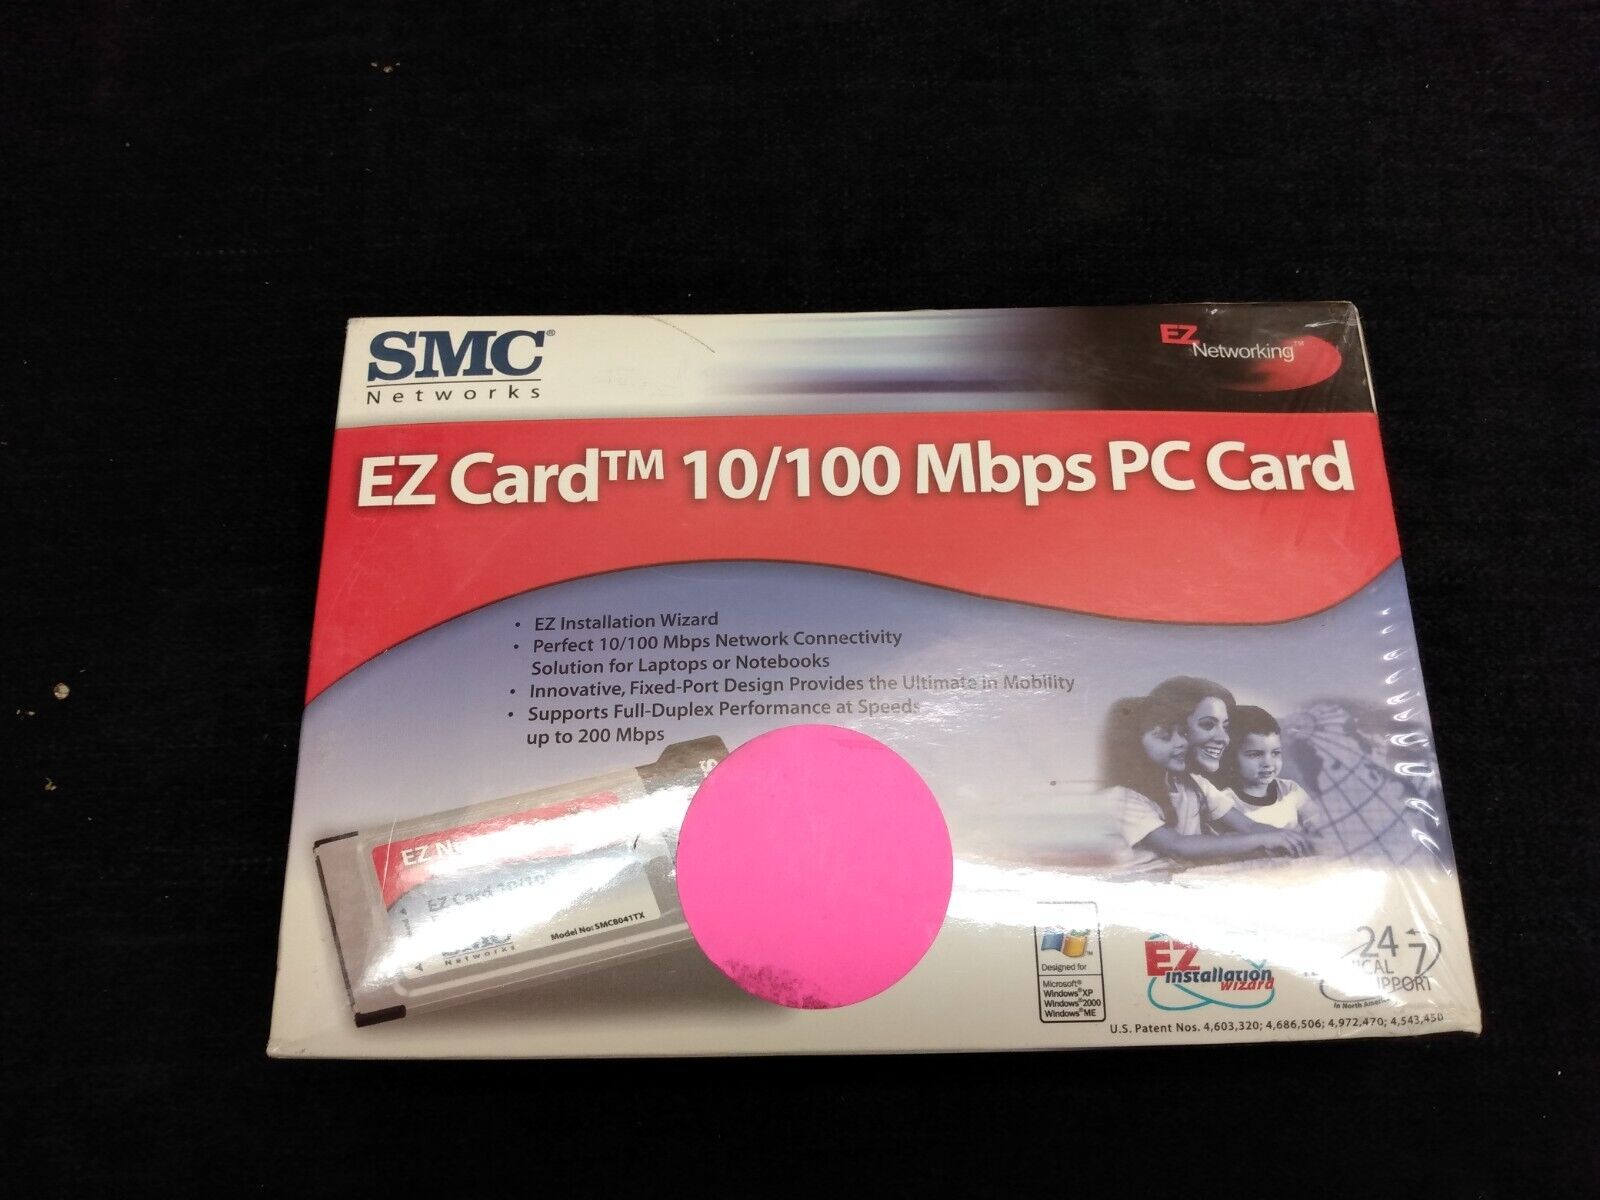 SMC NETWORKS FAST ETHERNET PC CARD EZ 10/100 Mbps NEW